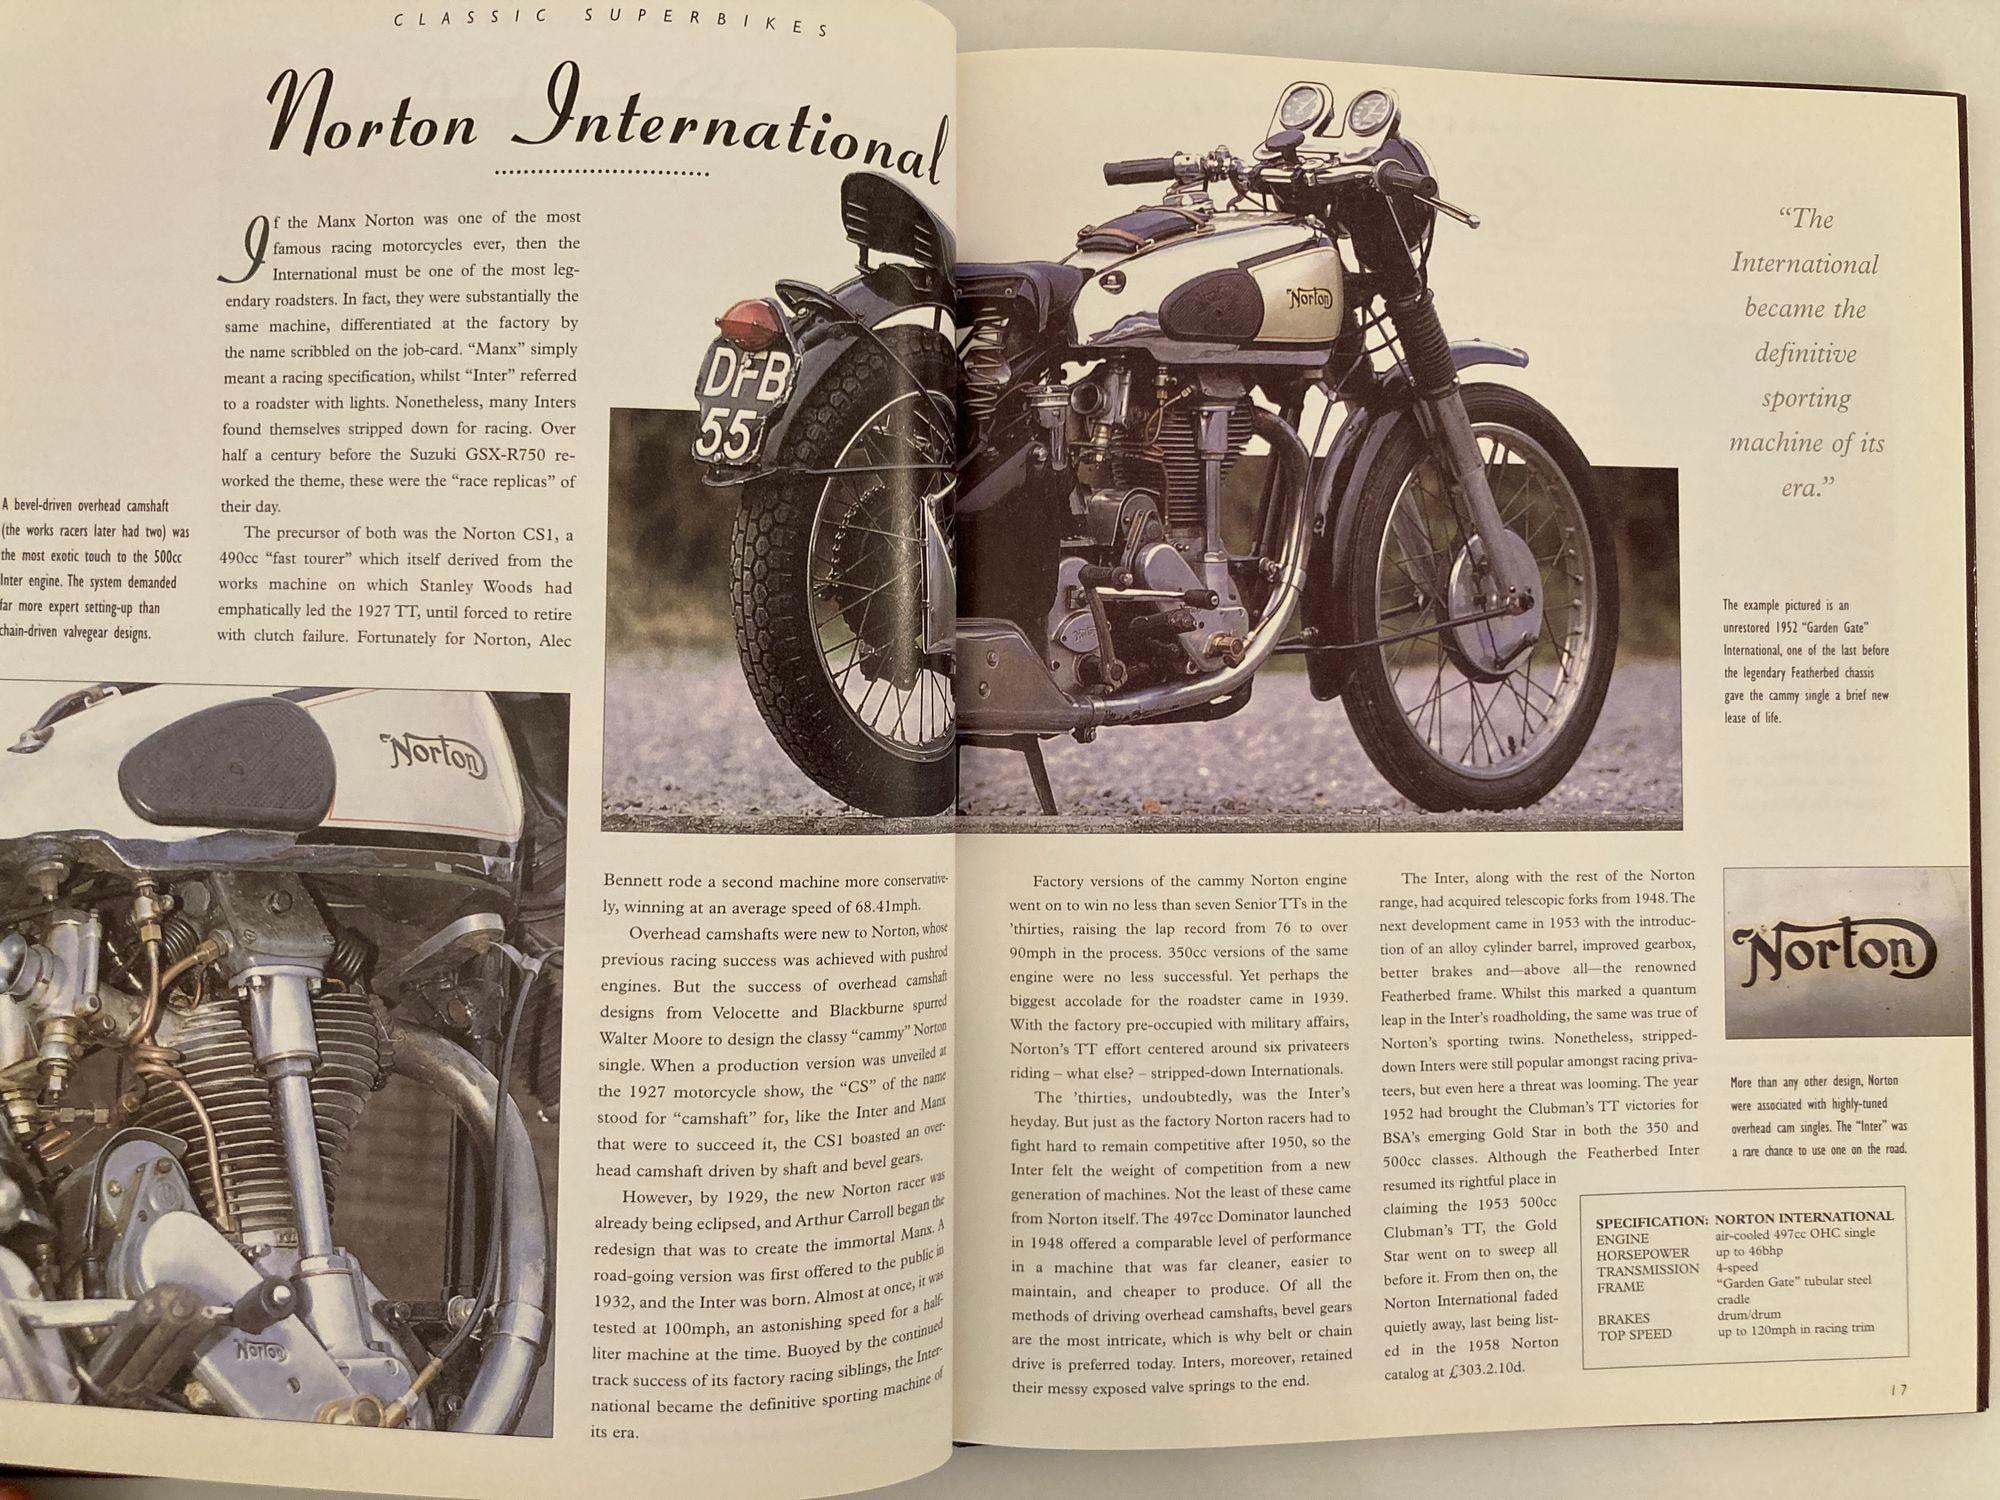 Livre « Classic Superbikes from Around the World », couverture rigide, 2003 en vente 2